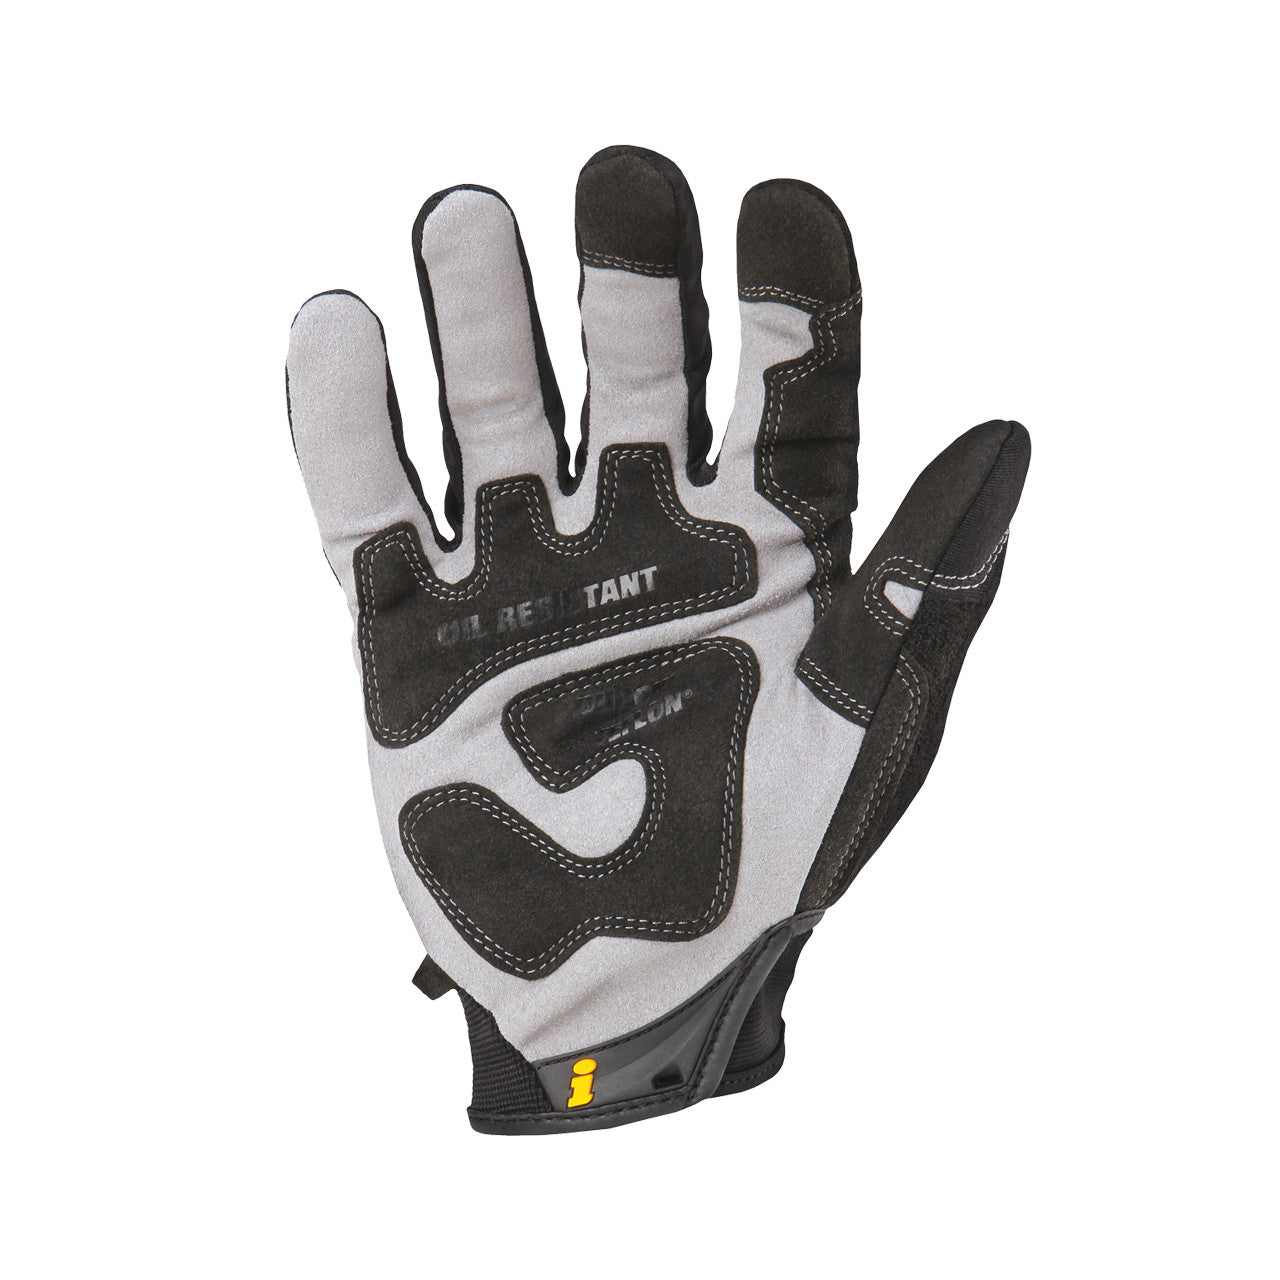 Ironclad Wrenchworx® Glove Black-eSafety Supplies, Inc